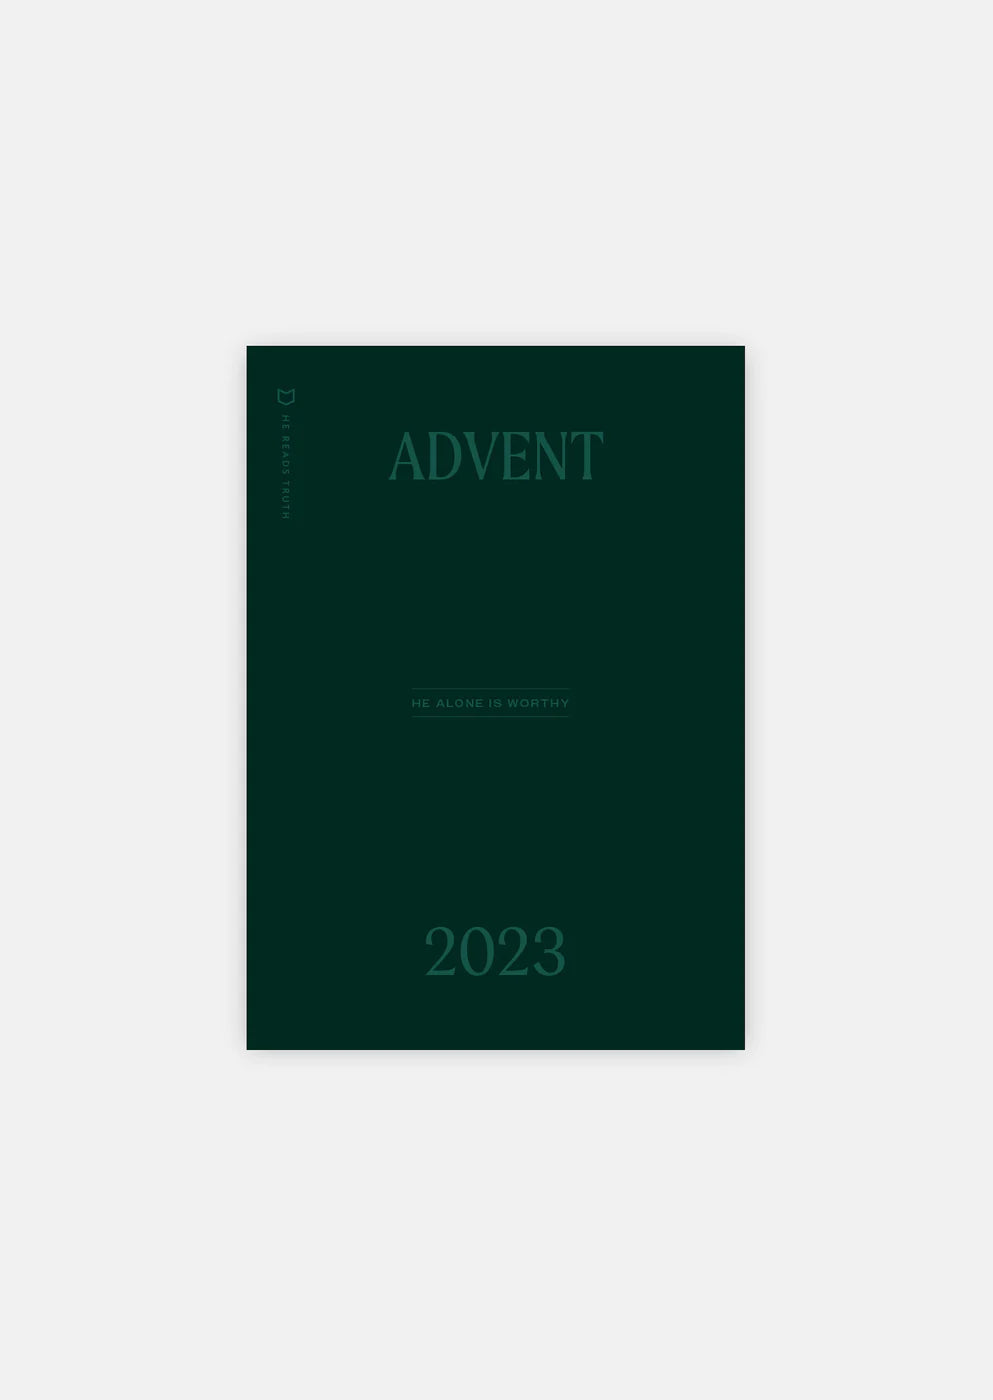 Advent | An Advent Season Bible Study for Men